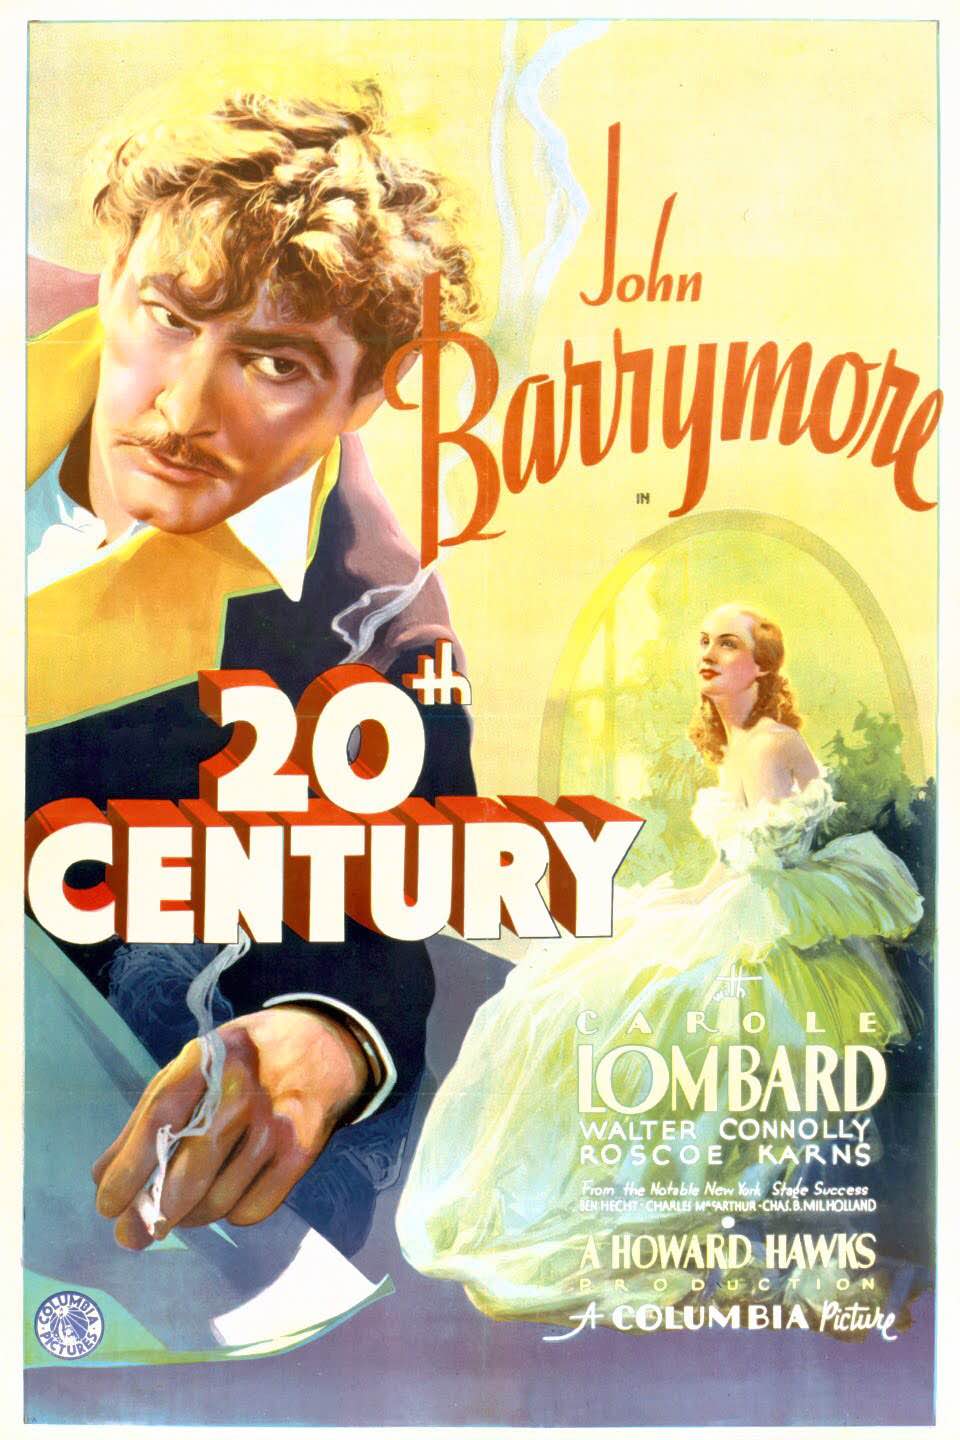 Poster for the film Twentieth Century